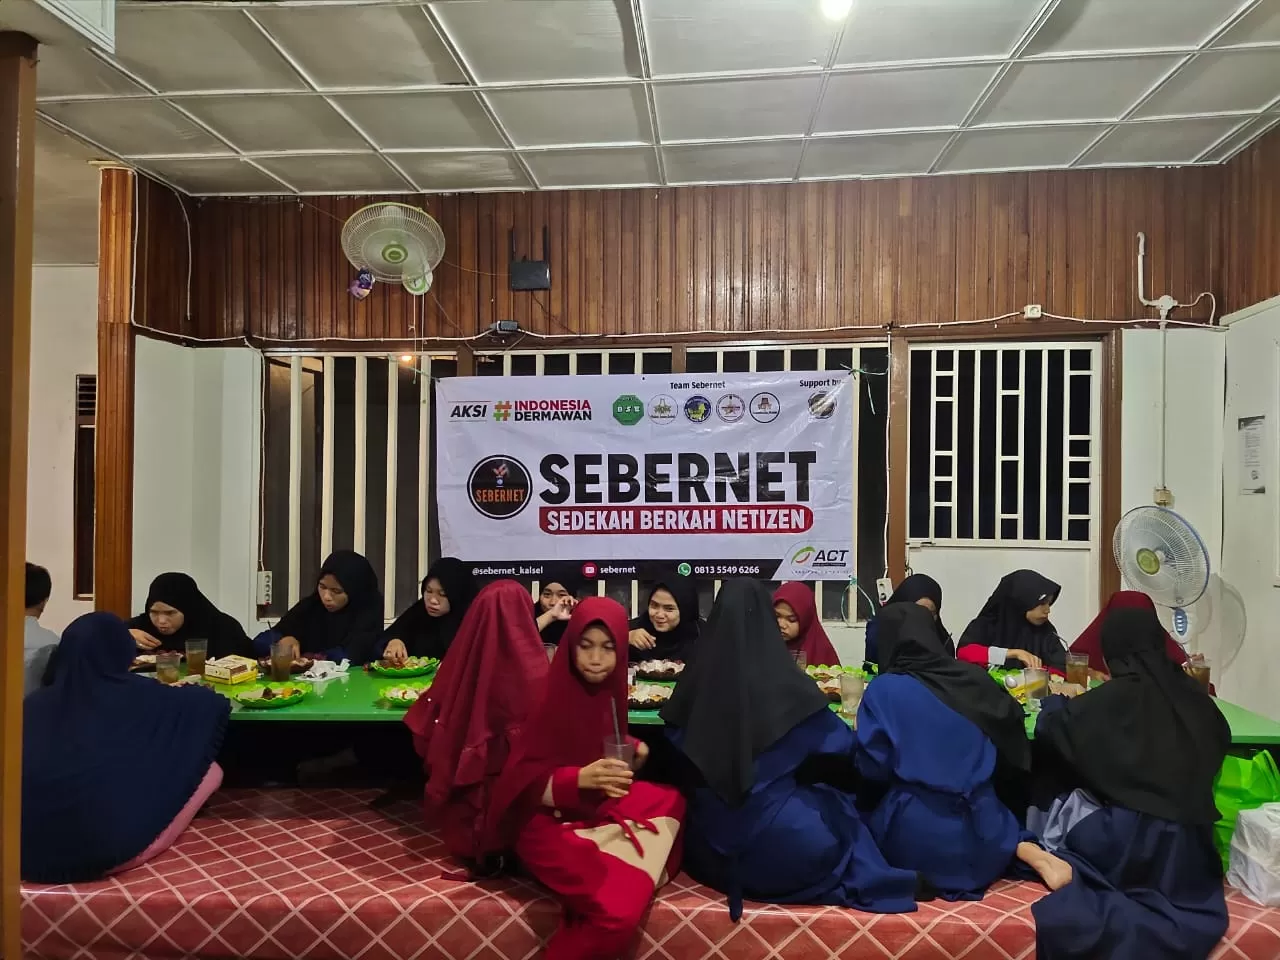 BERBAGI: Tim Sebernet mengajak anak-anak Panti Asuhan Nuruddin makan malam bersama di sebuah rumah makan di Jalan Ahmad Yani km 4.